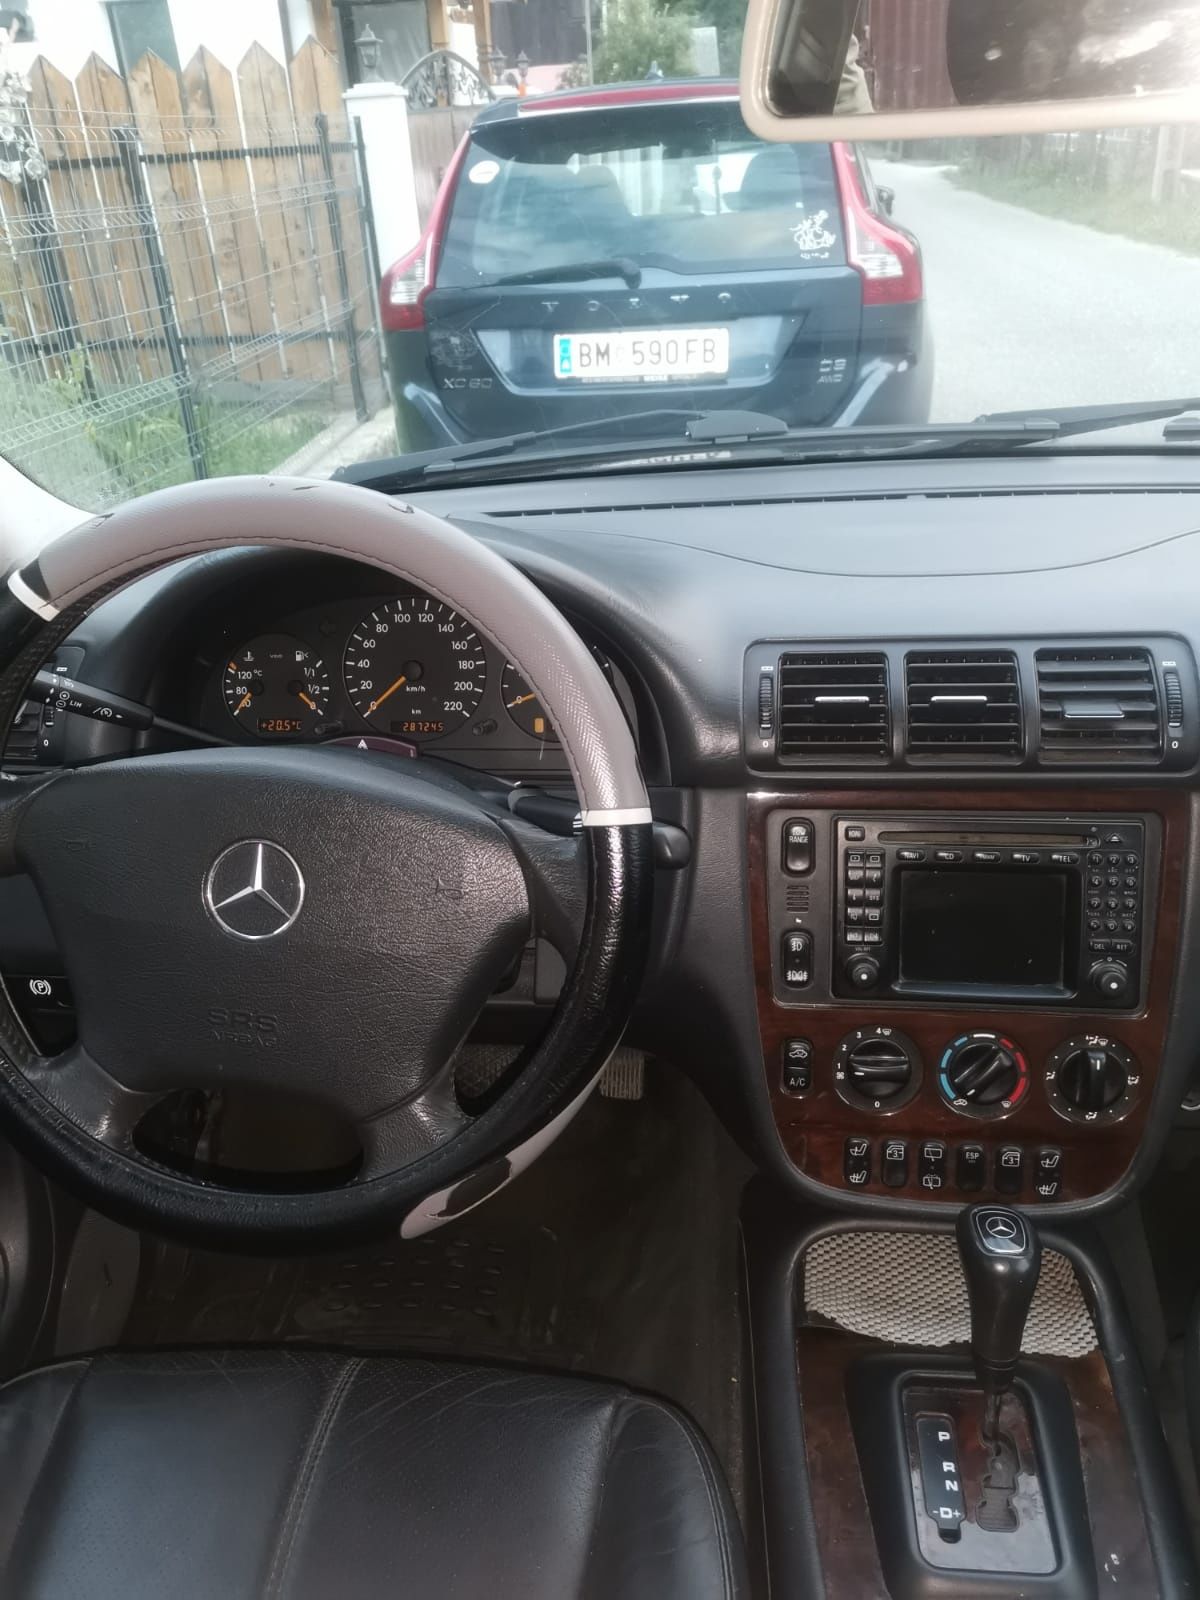 Mercedes ML2.7 2001